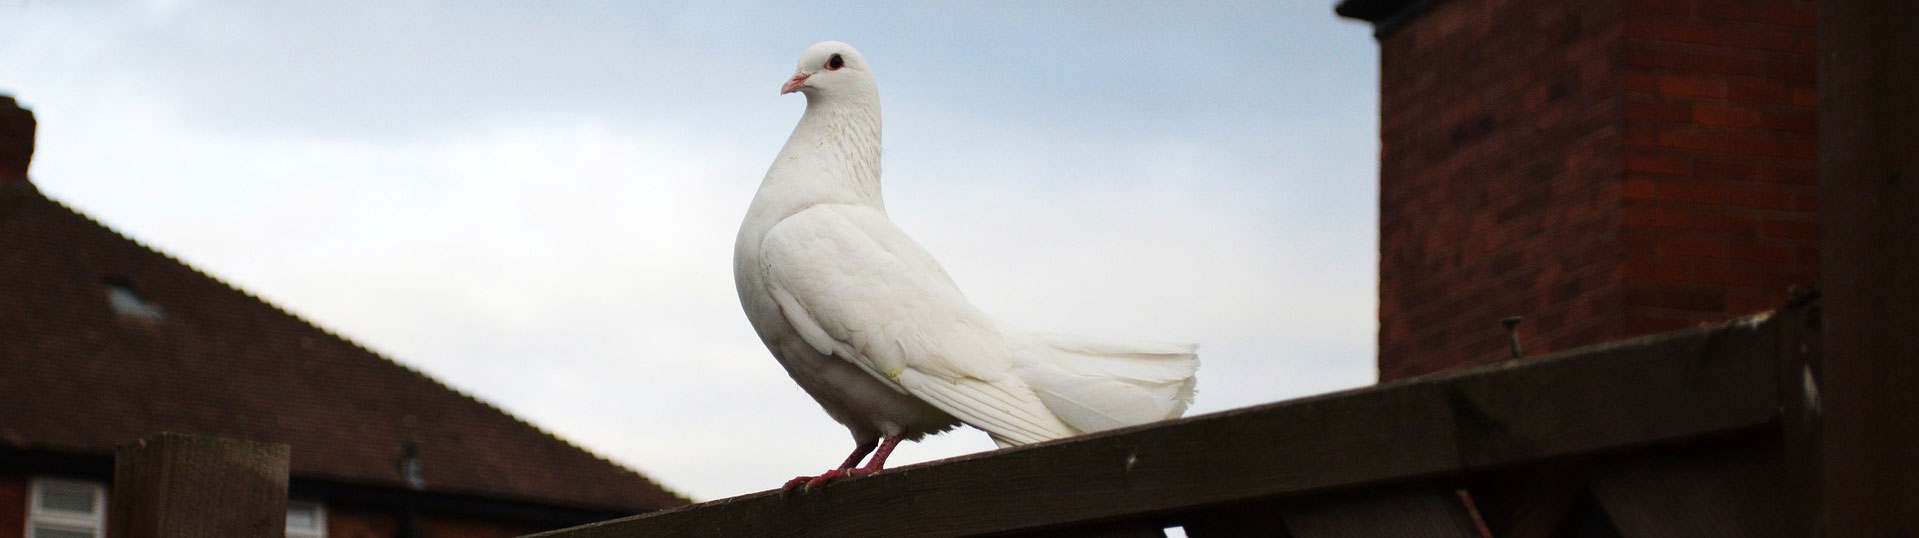 pigeon pheromones and homing behavior